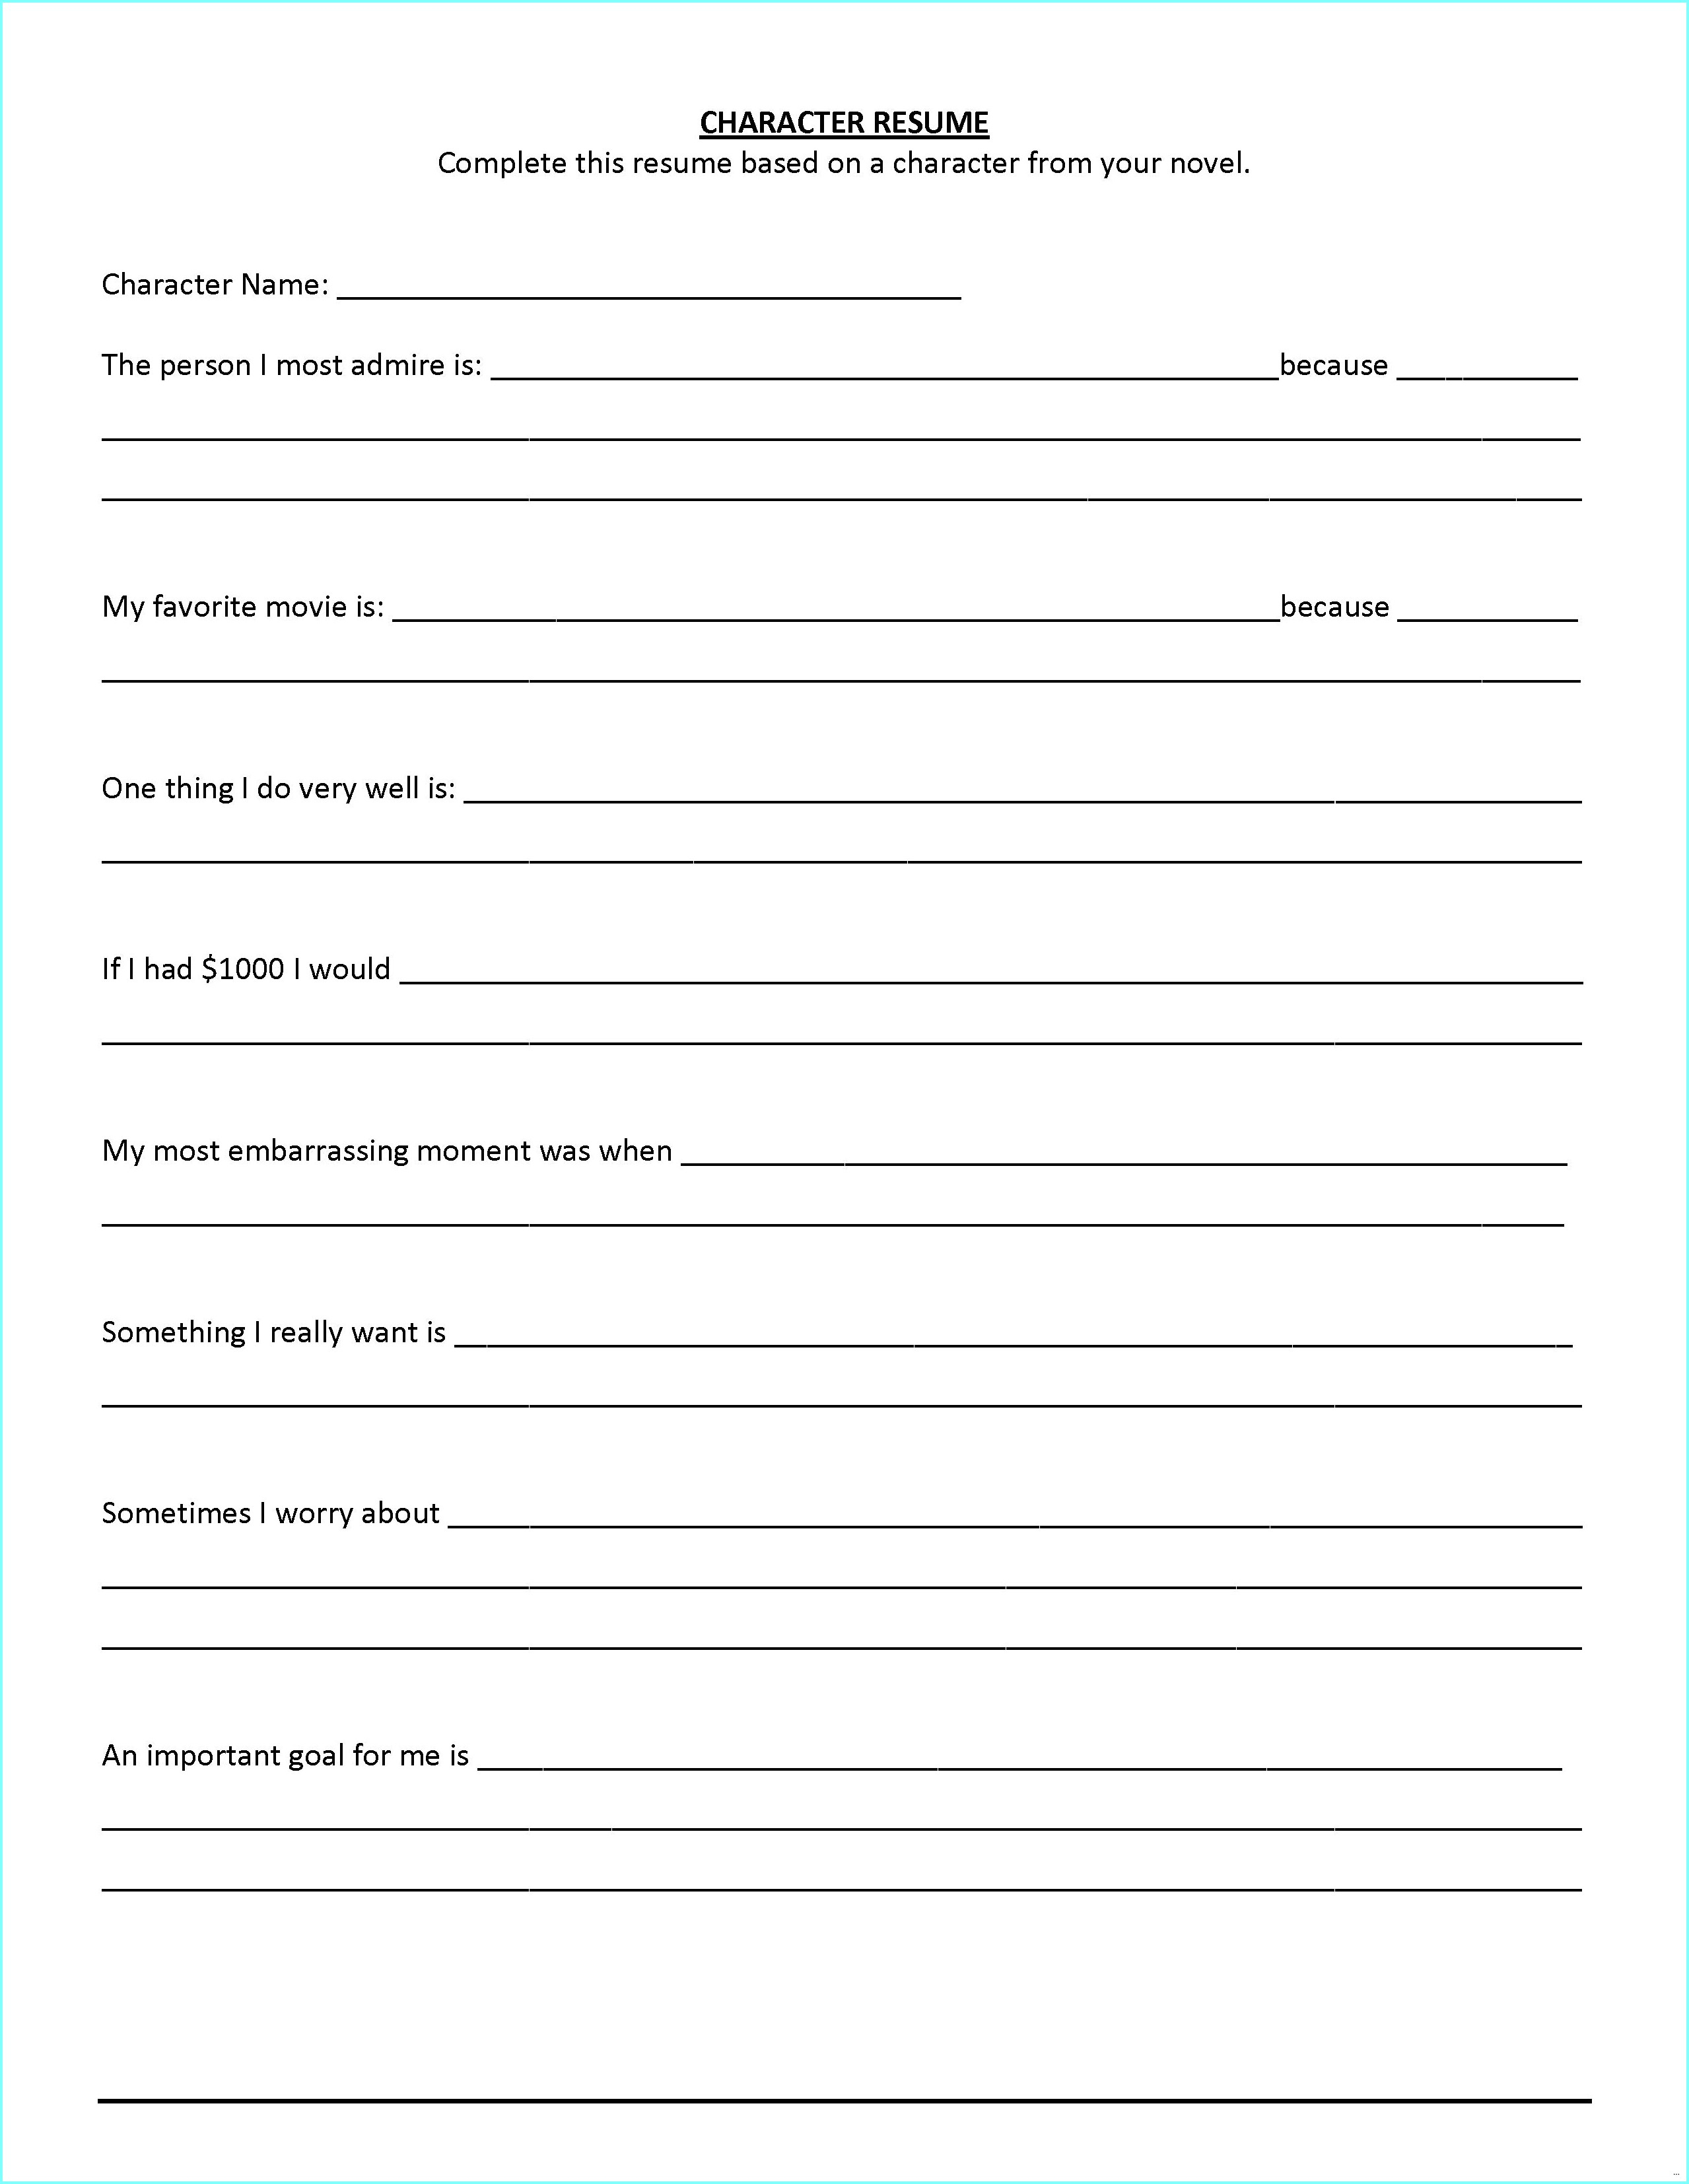 Free Printable Blank Resume Forms - Resume : Resume Examples #l5Wypkk3Q2 - Free Blank Resume Forms Printable